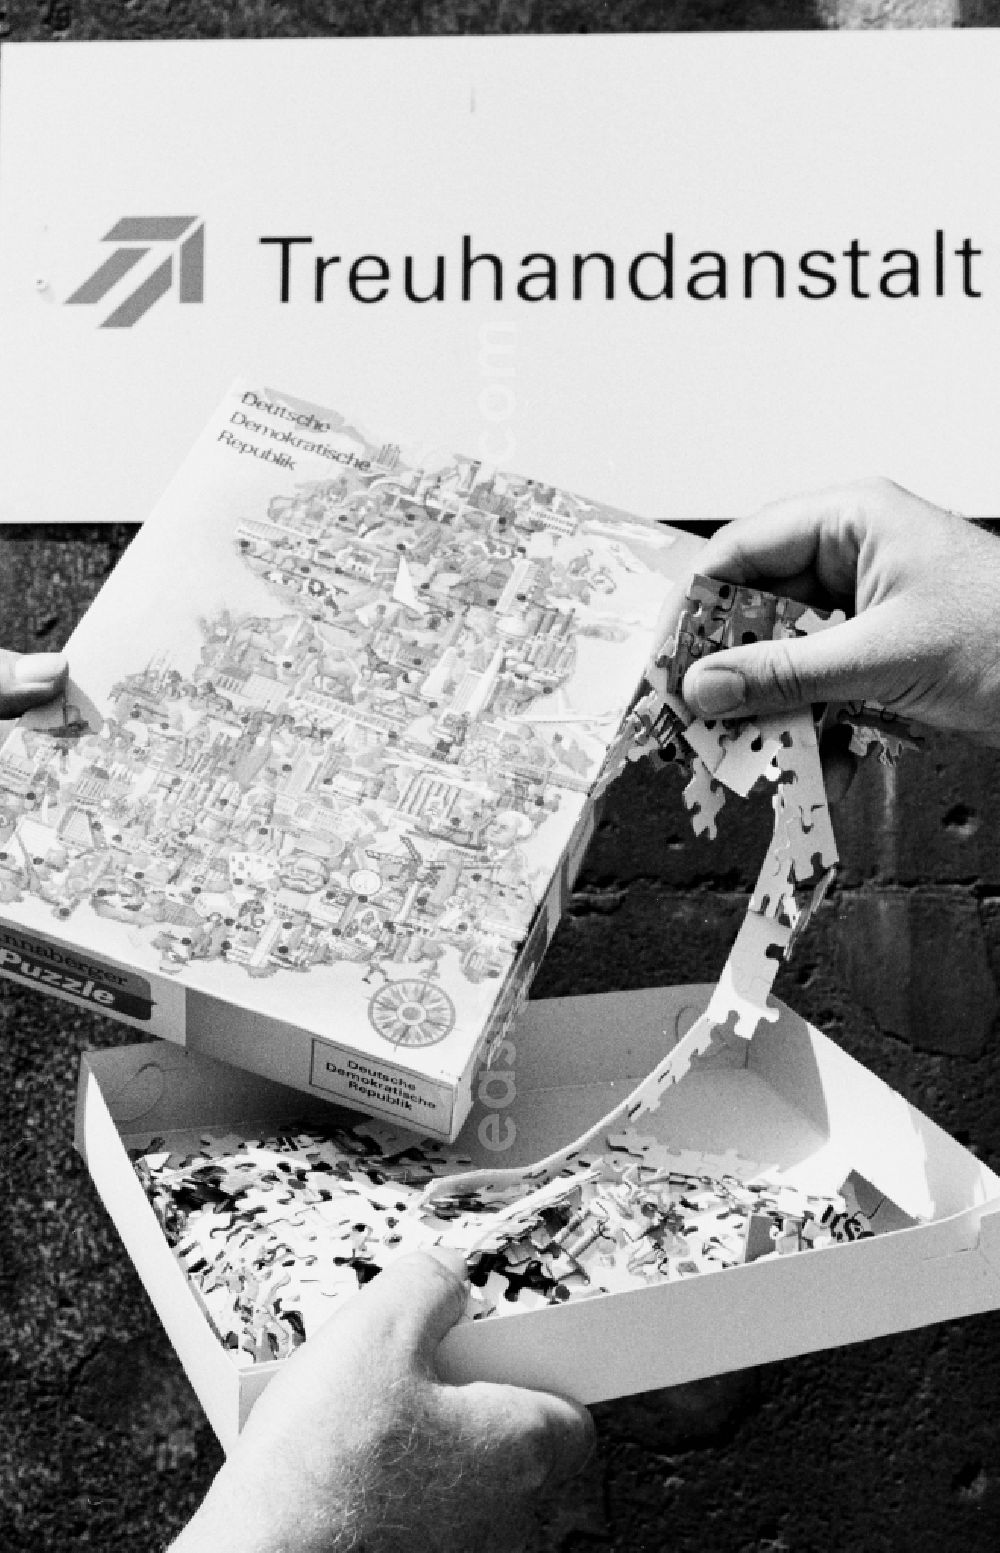 GDR picture archive: Berlin - Demonstration and street protest action hunderter Menschen vor der Zentrale der Treuhandanstalt an der Wilhelmstrasse in Berlin, the former capital of the GDR, German Democratic Republic